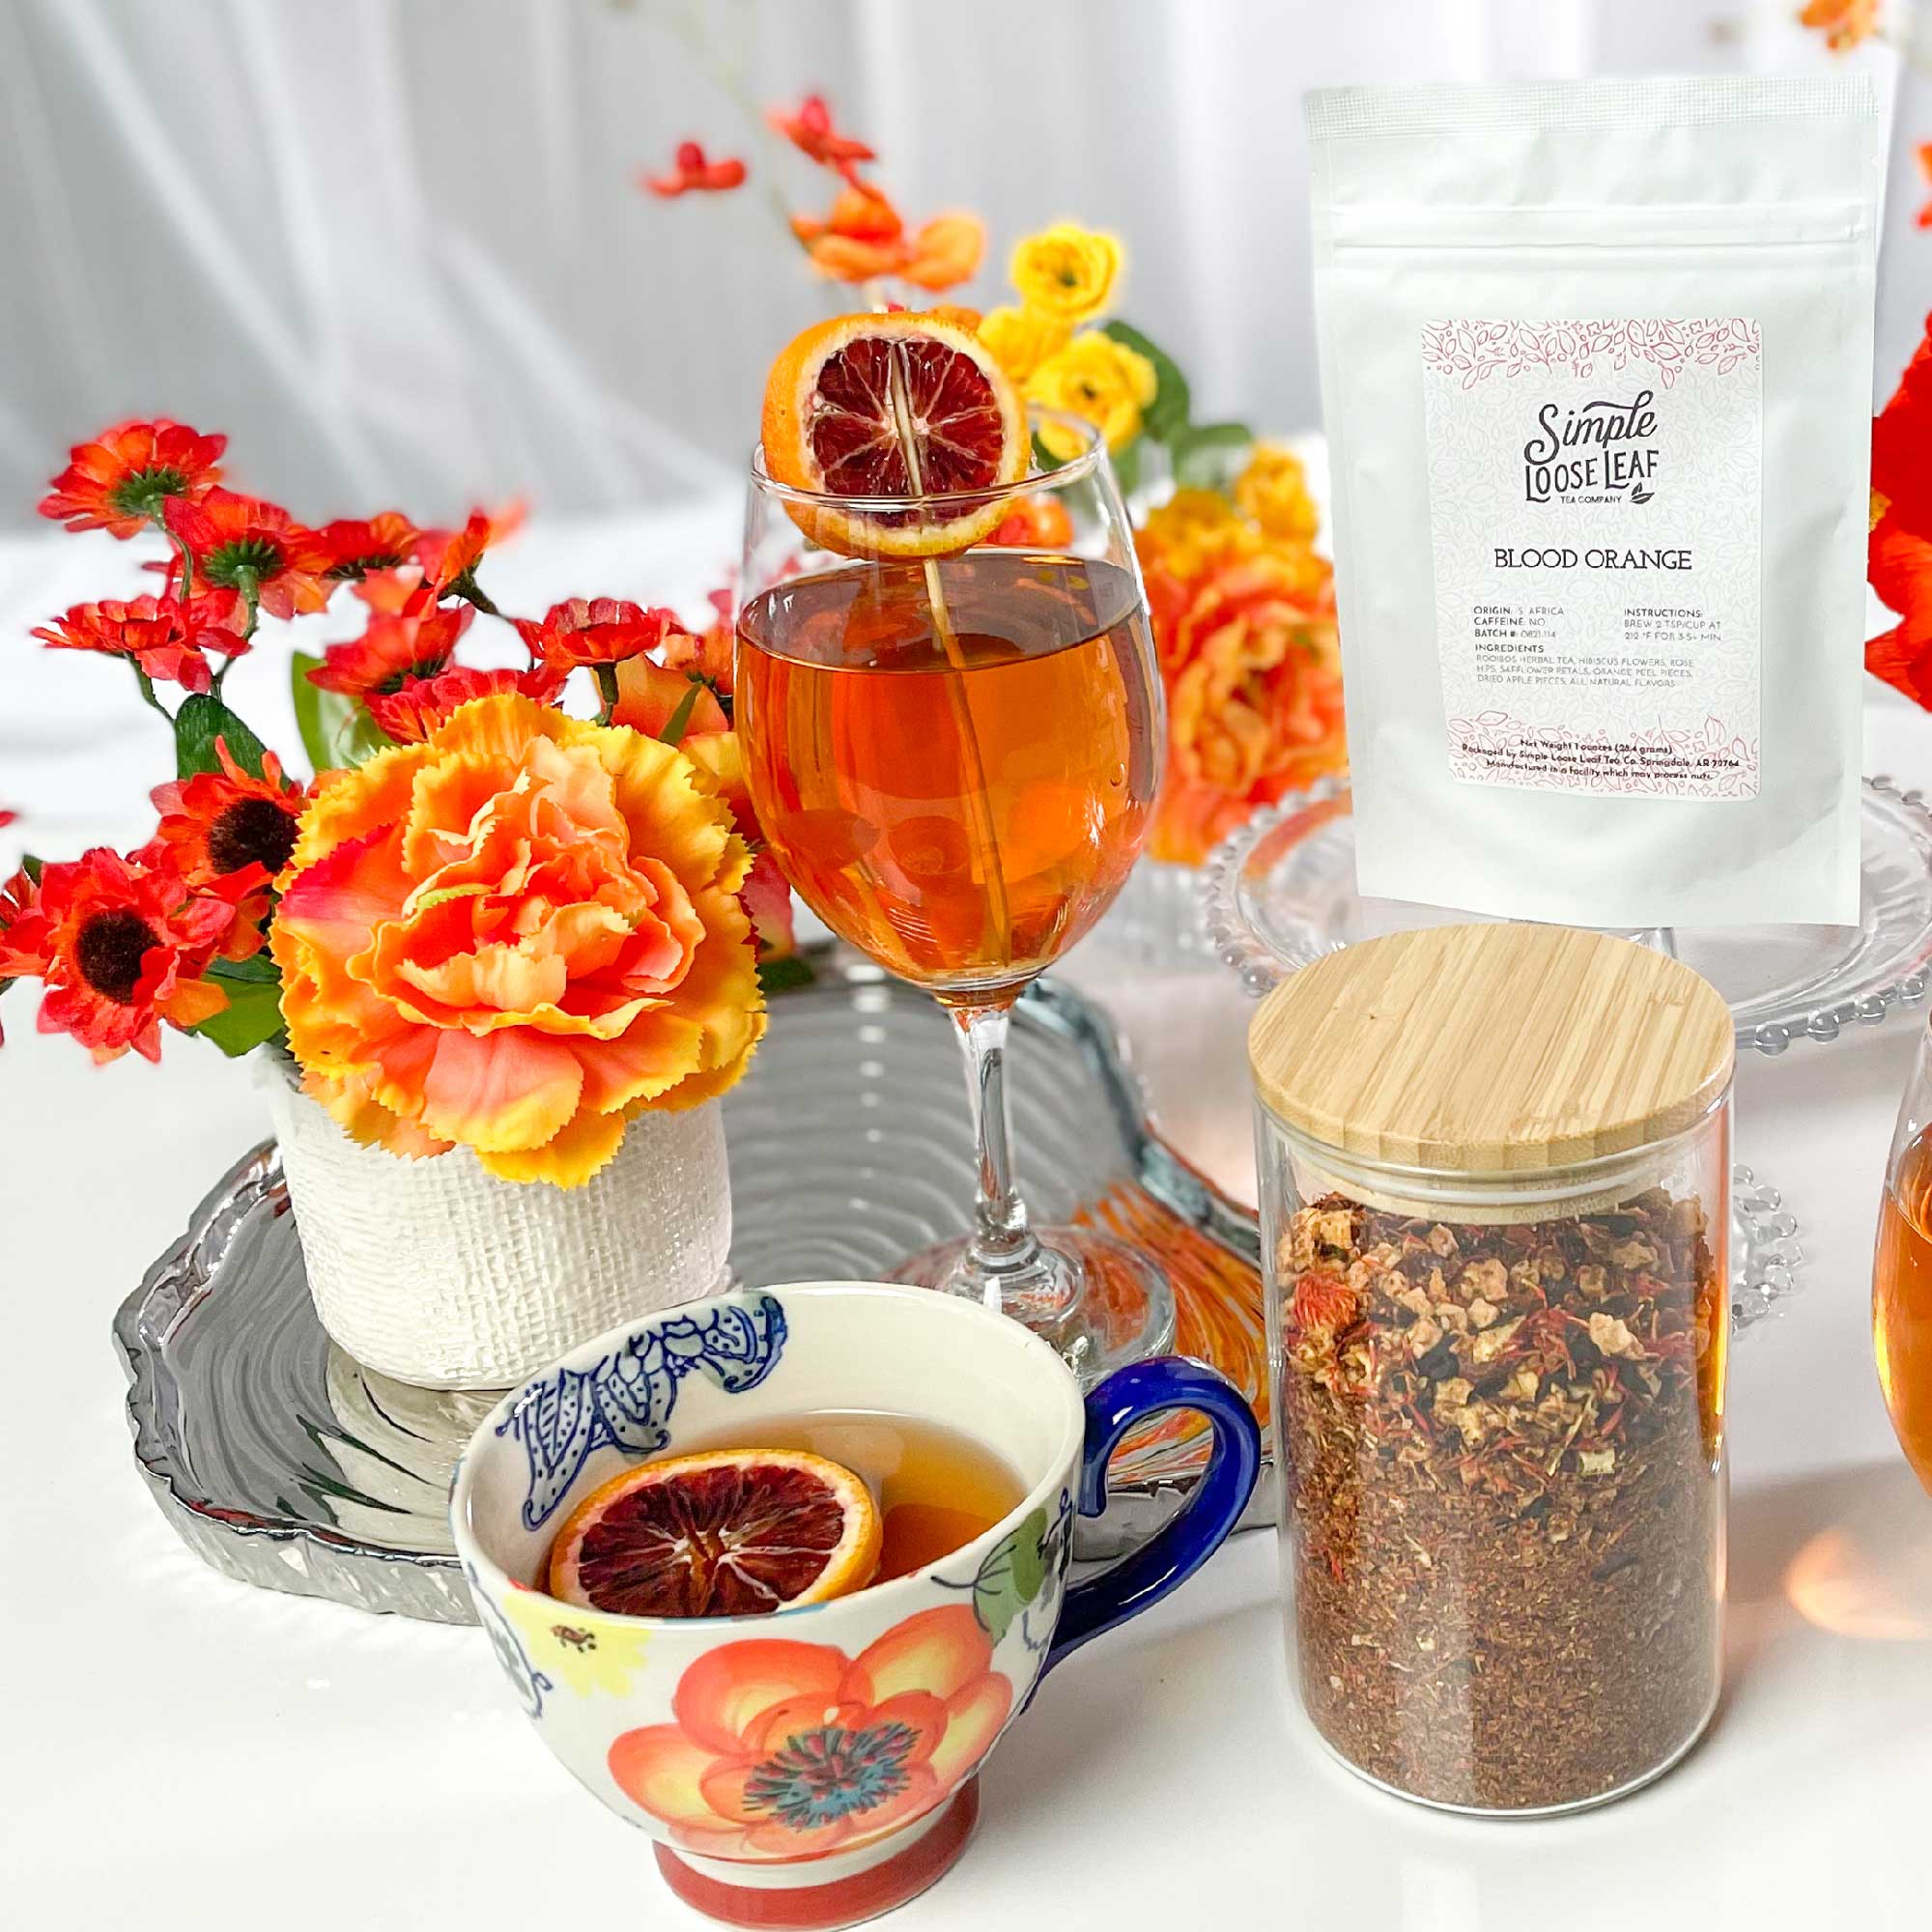 Blood Orange Herbal Tea - Caffeine Free - Light and Earthy